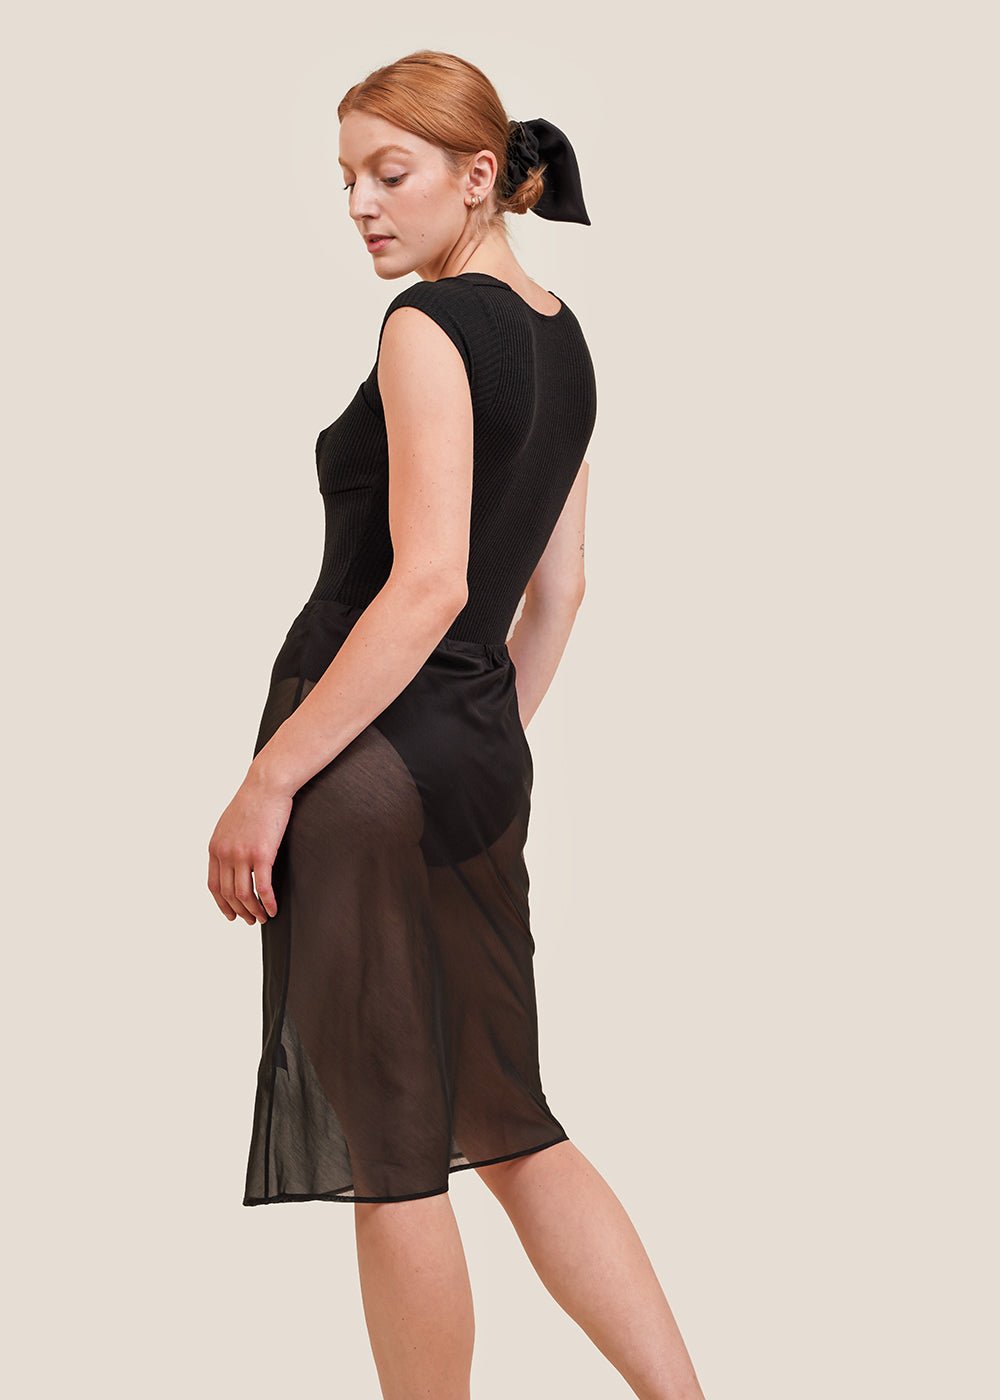 Angie Bauer Black Sarah Bodysuit - New Classics Studios Sustainable Ethical Fashion Canada